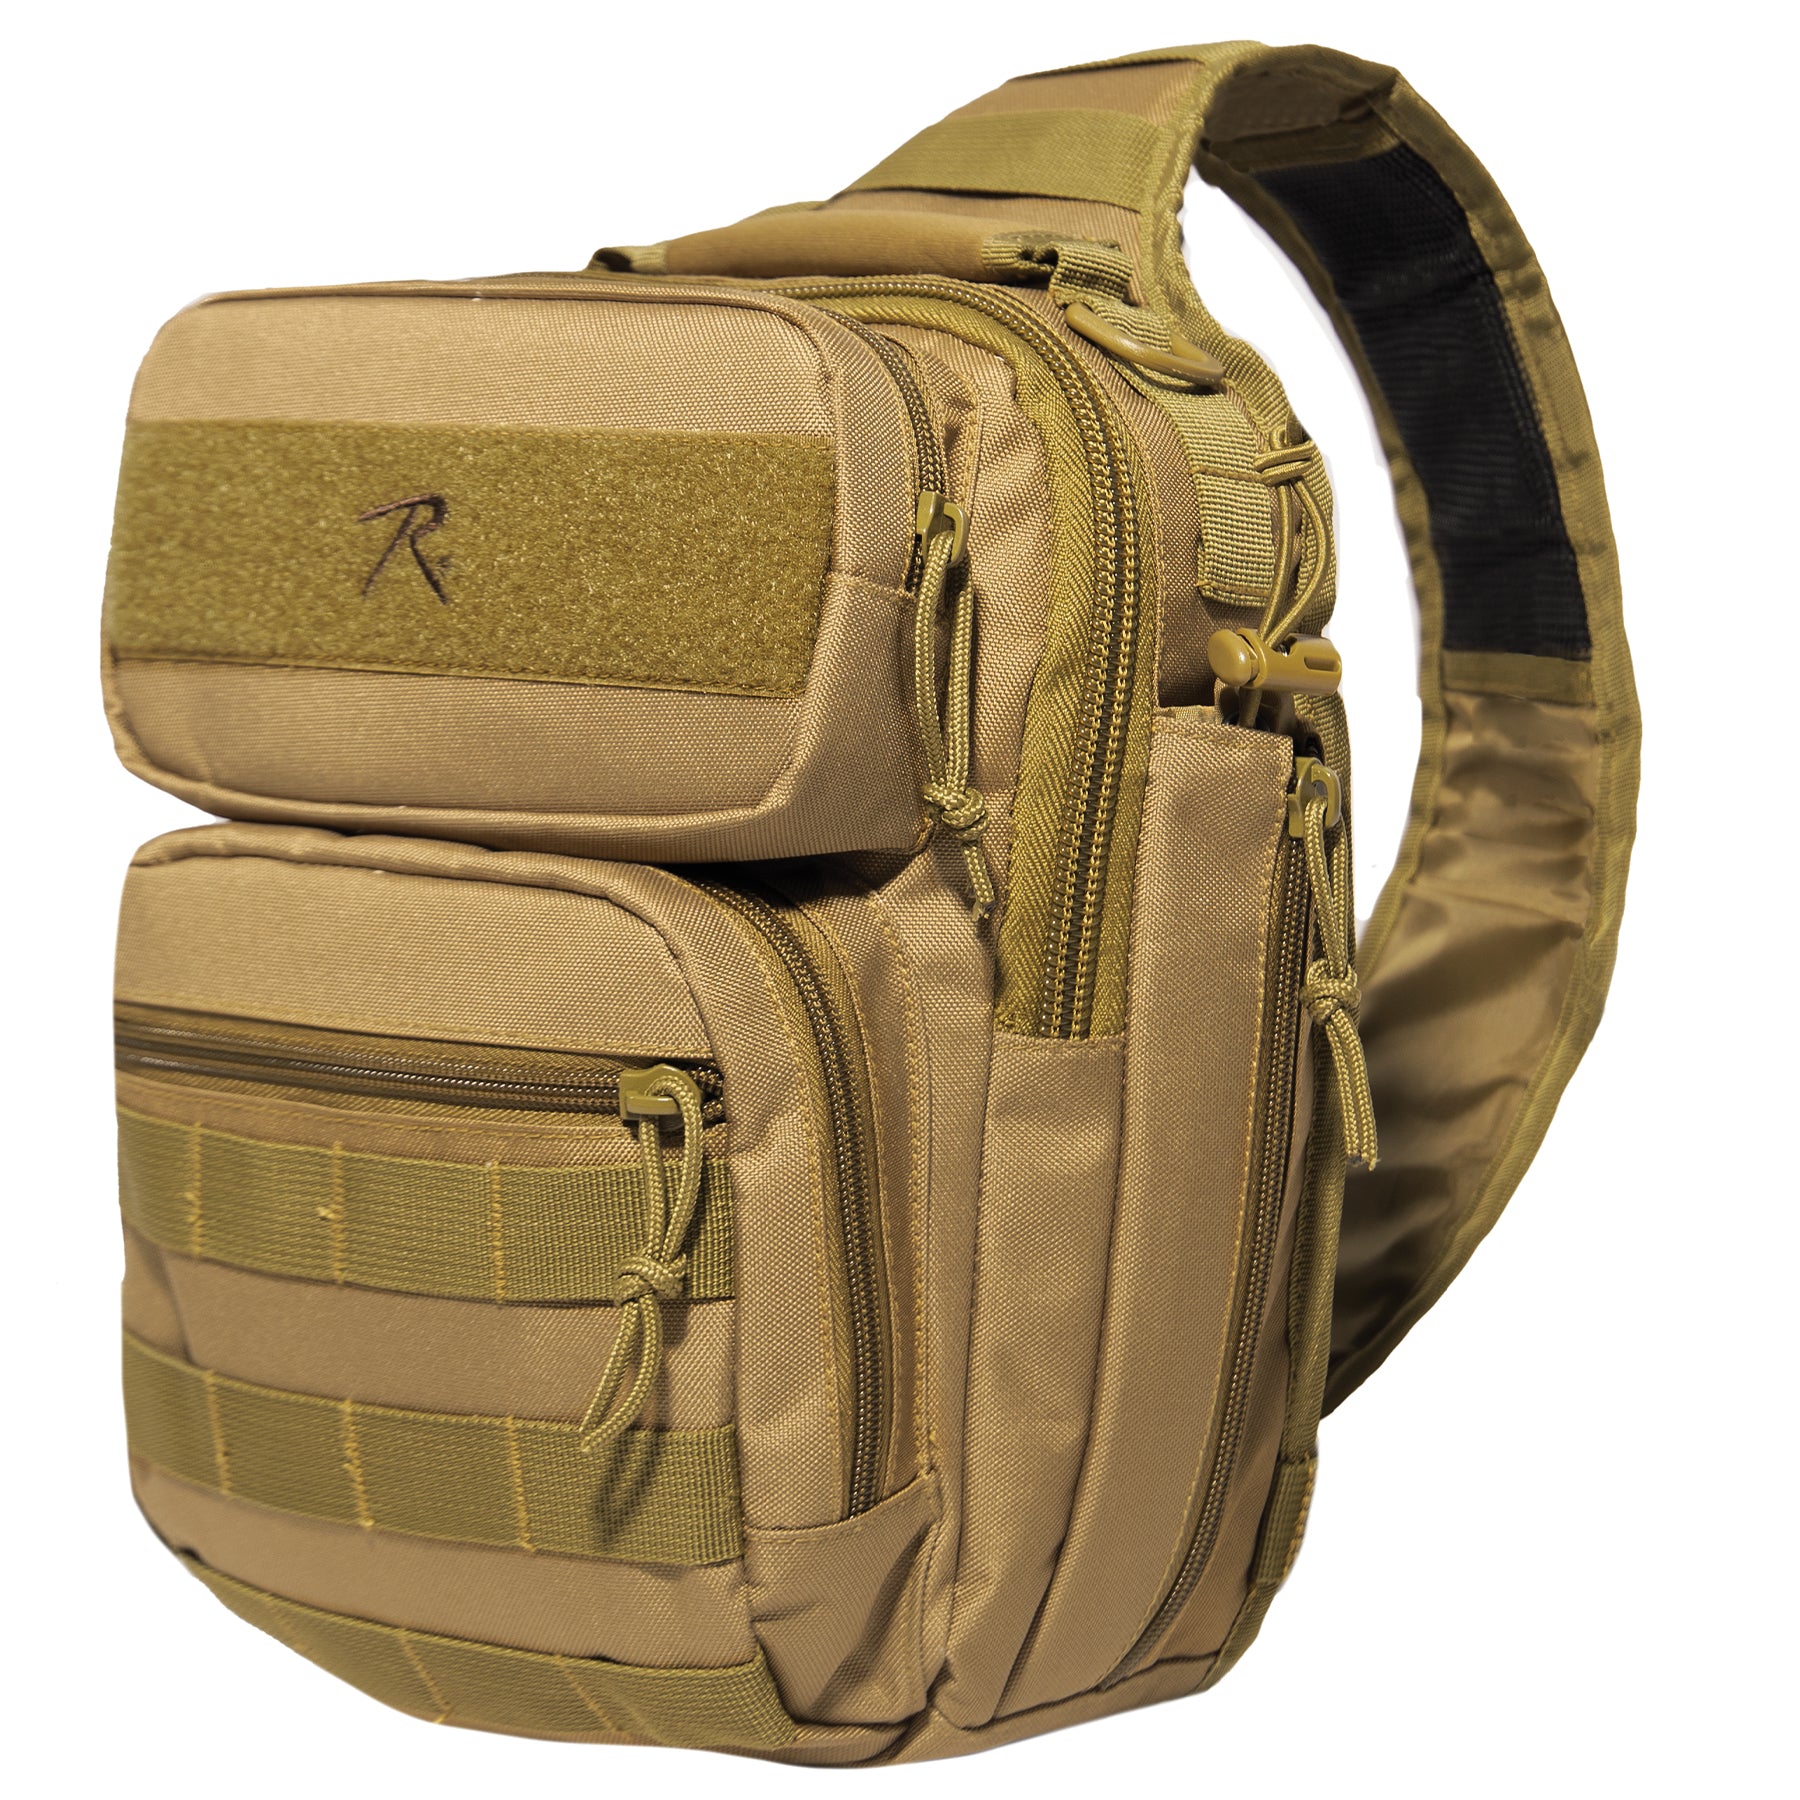 Milspec Compact Tactisling Shoulder Bag Concealed Carry Packs MilTac Tactical Military Outdoor Gear Australia